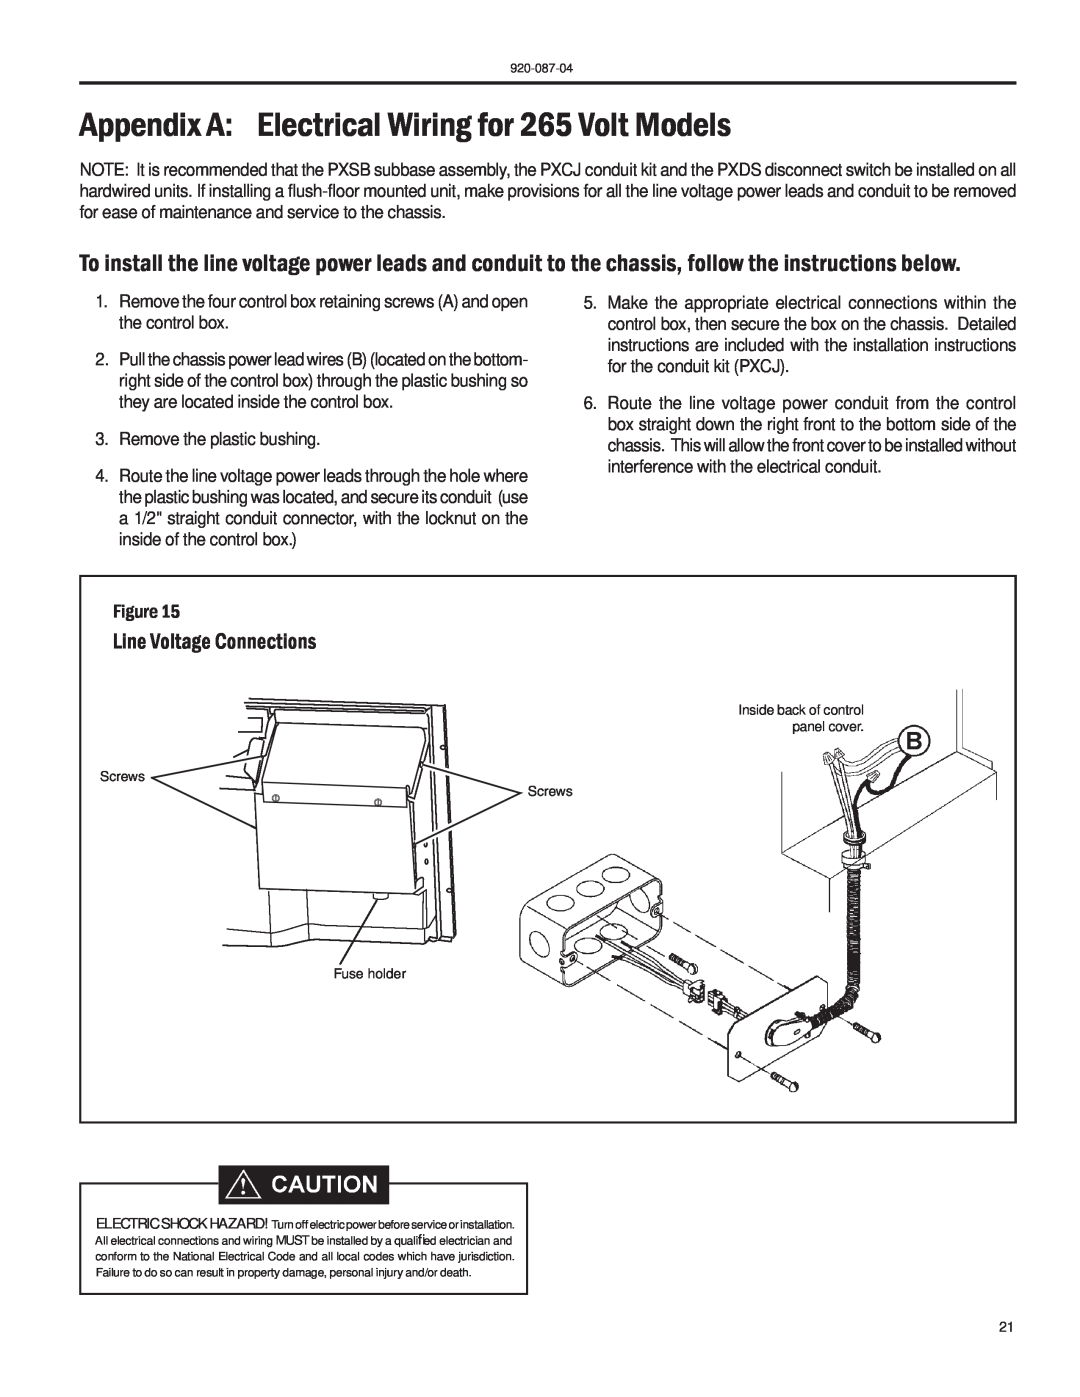 Friedrich HEAT PUMPS manual Appendix A Electrical Wiring for 265 Volt Models, Line Voltage Connections 